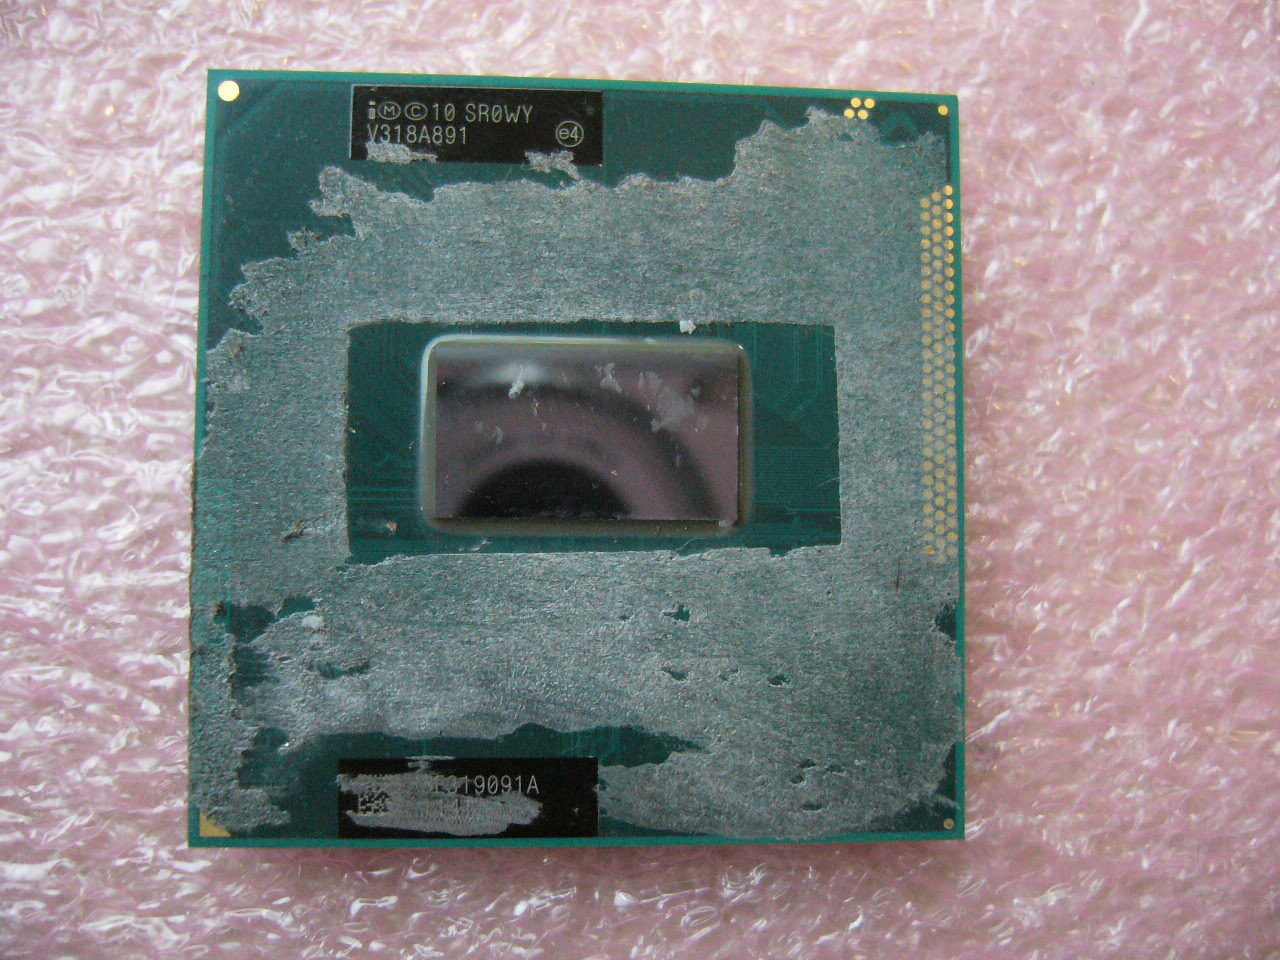 QTY 1x Intel CPU i5-3230M Dual-Core 2.6 Ghz PGA988 SR0WY Socket G2 NOT WORKING - Click Image to Close